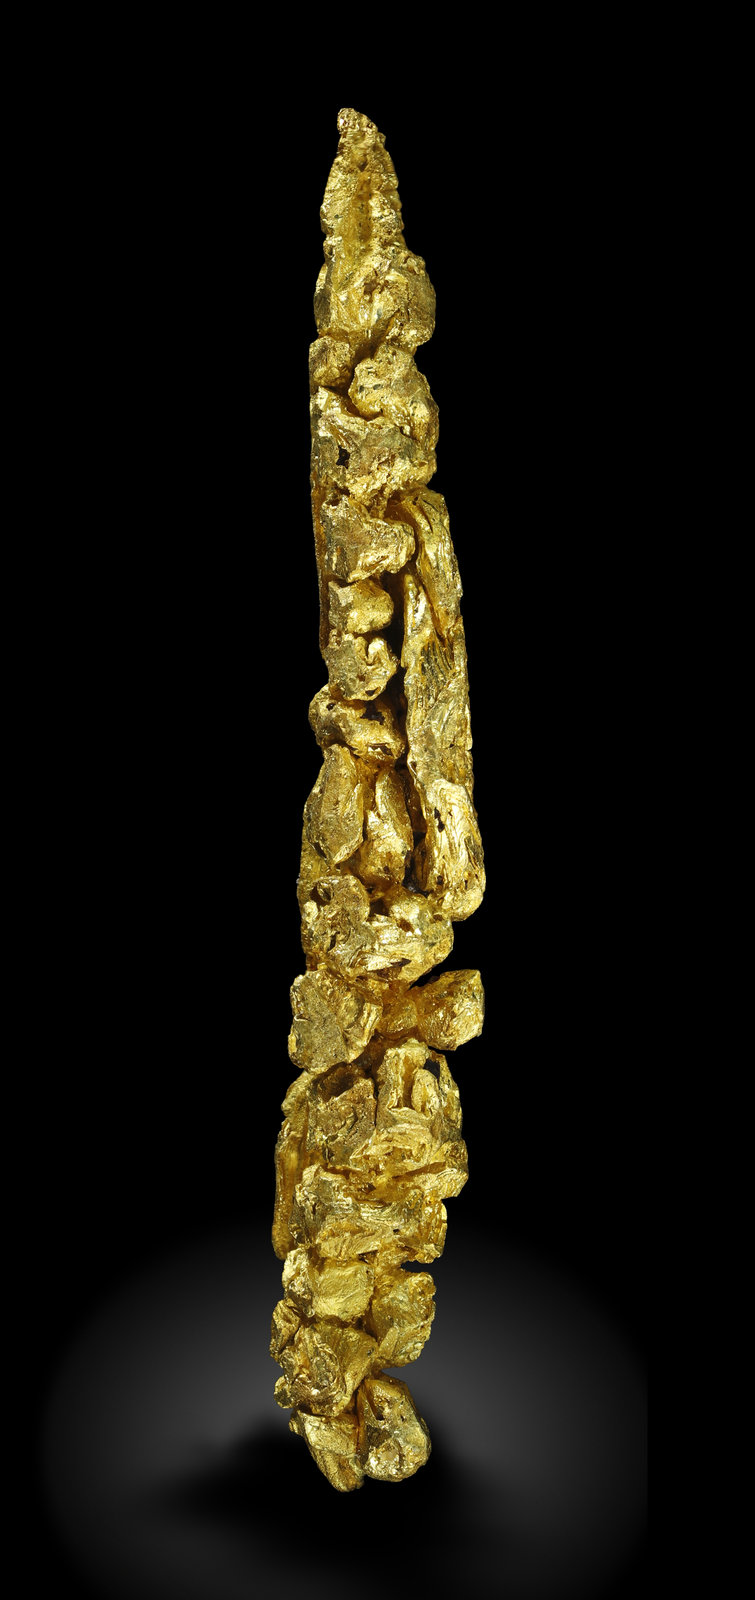 specimens/s_imagesAM5/Gold-MG7AM5_0480_f.jpg